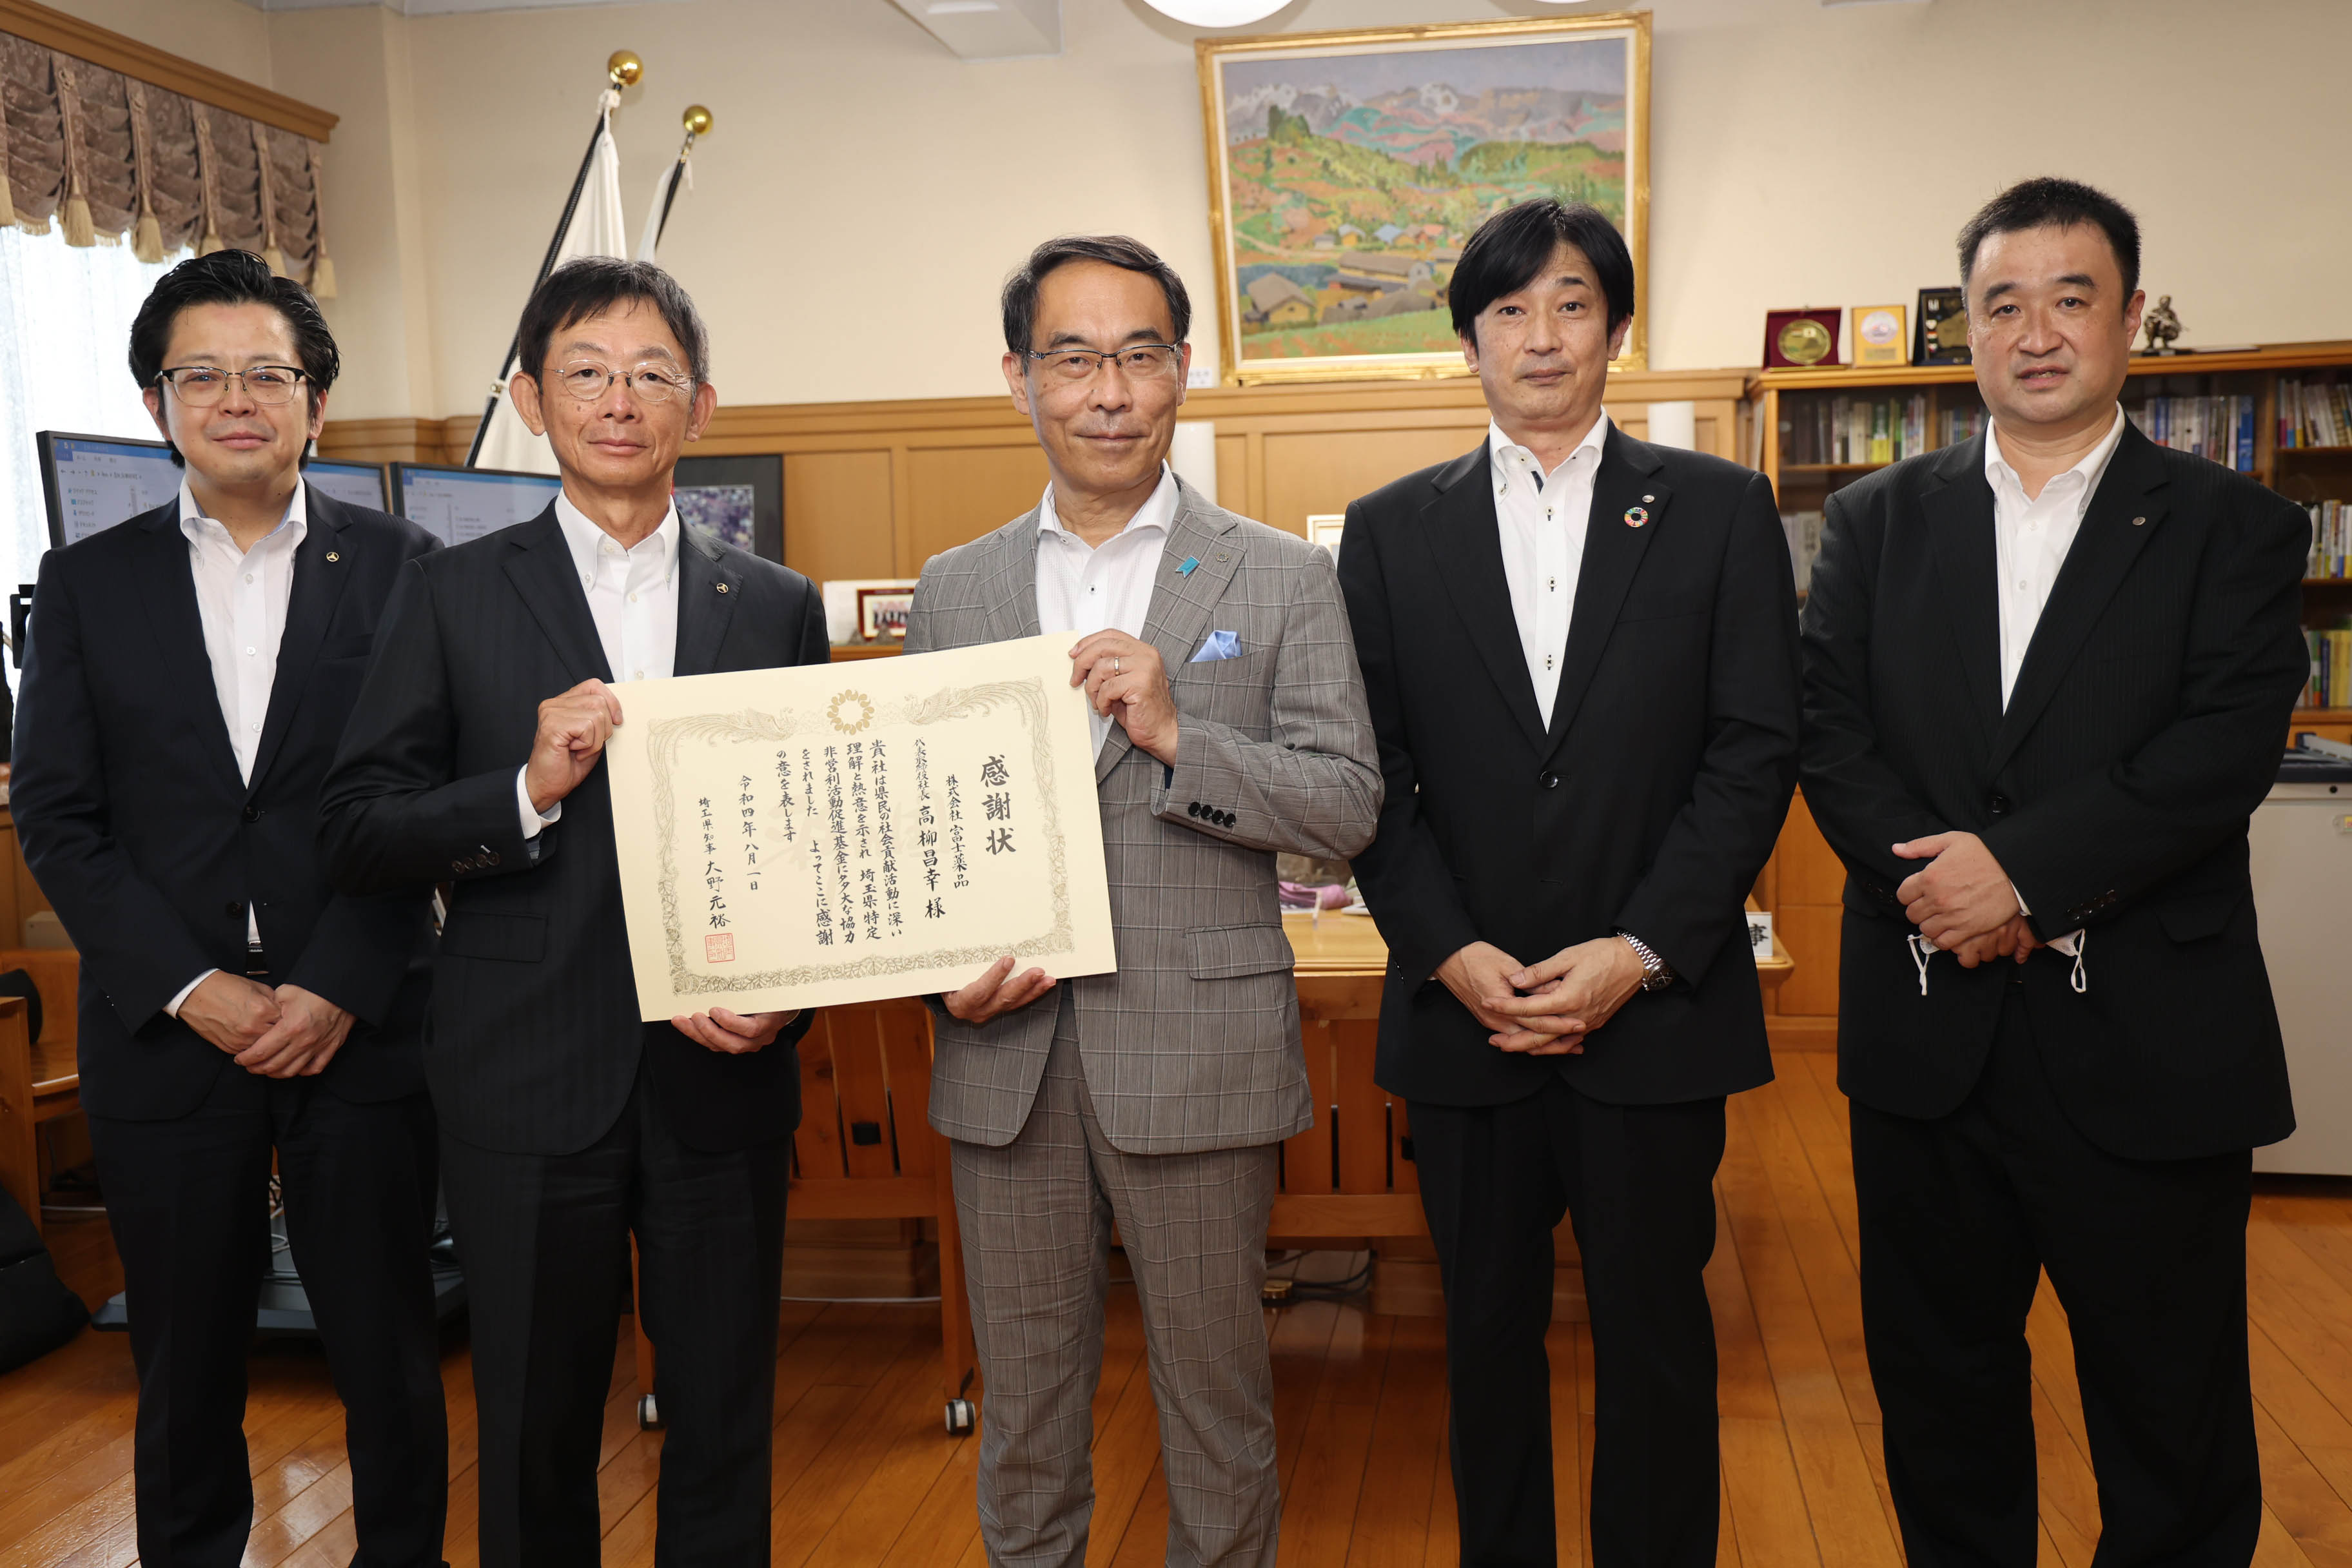 埼玉県NPO基金感謝状贈呈式で記念撮影する知事